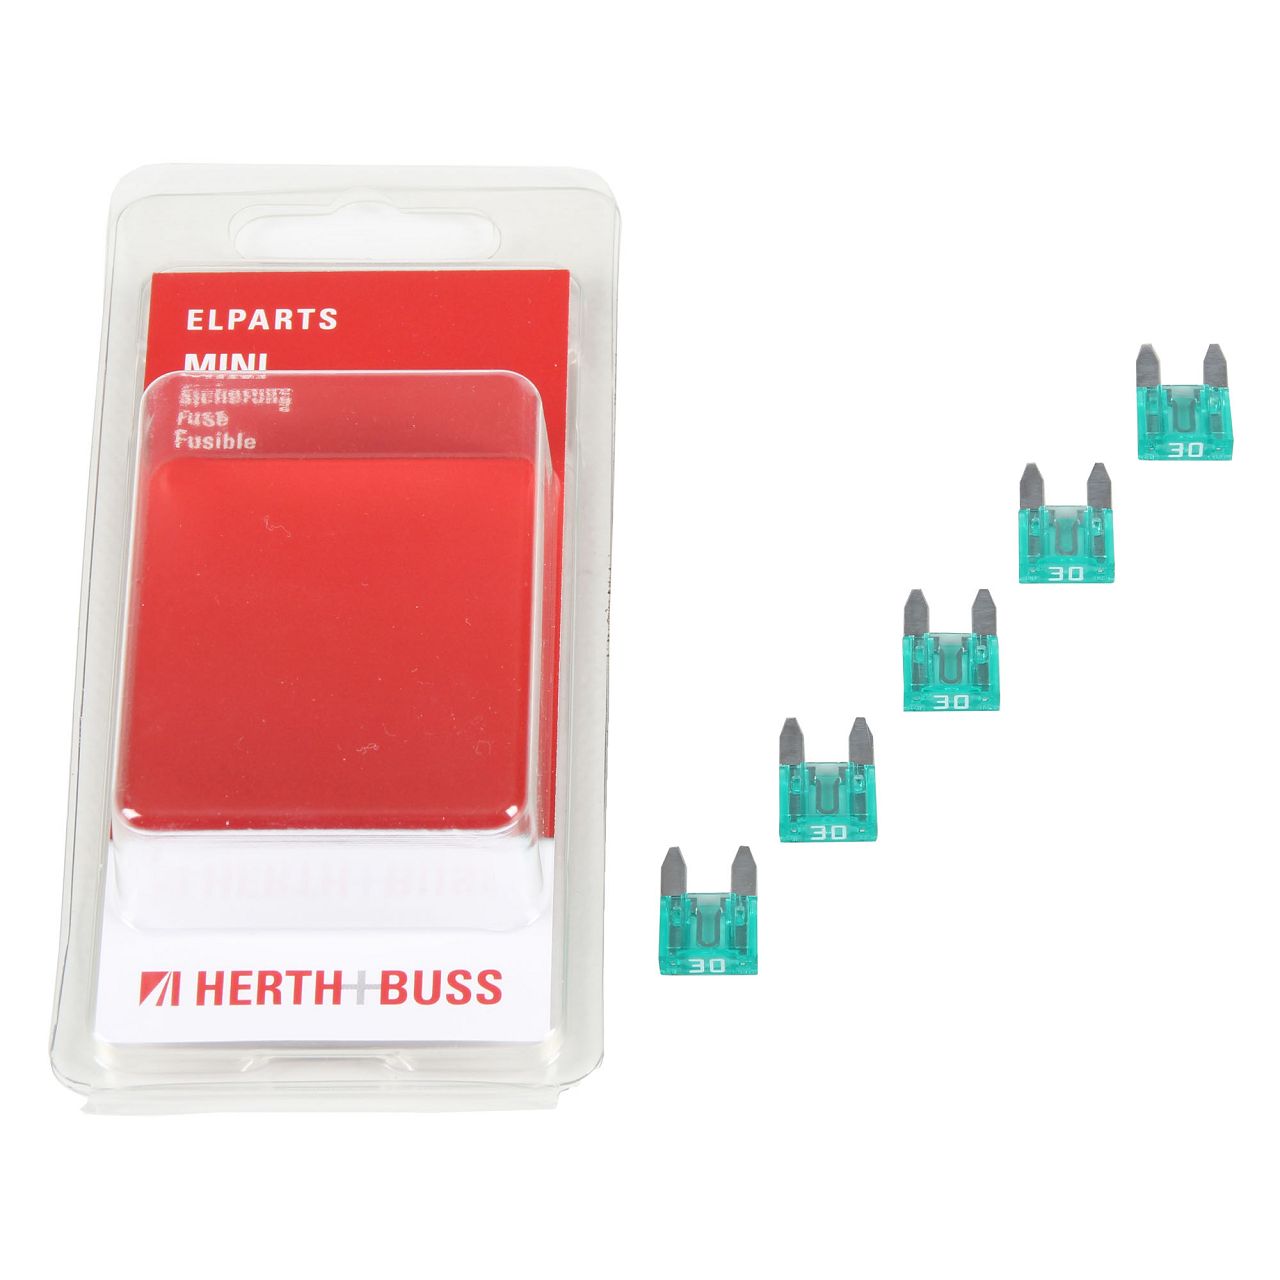 5x HERTH+BUSS ELPARTS Sicherung MINI-Flachsicherung 30A bis 32V GRÜN